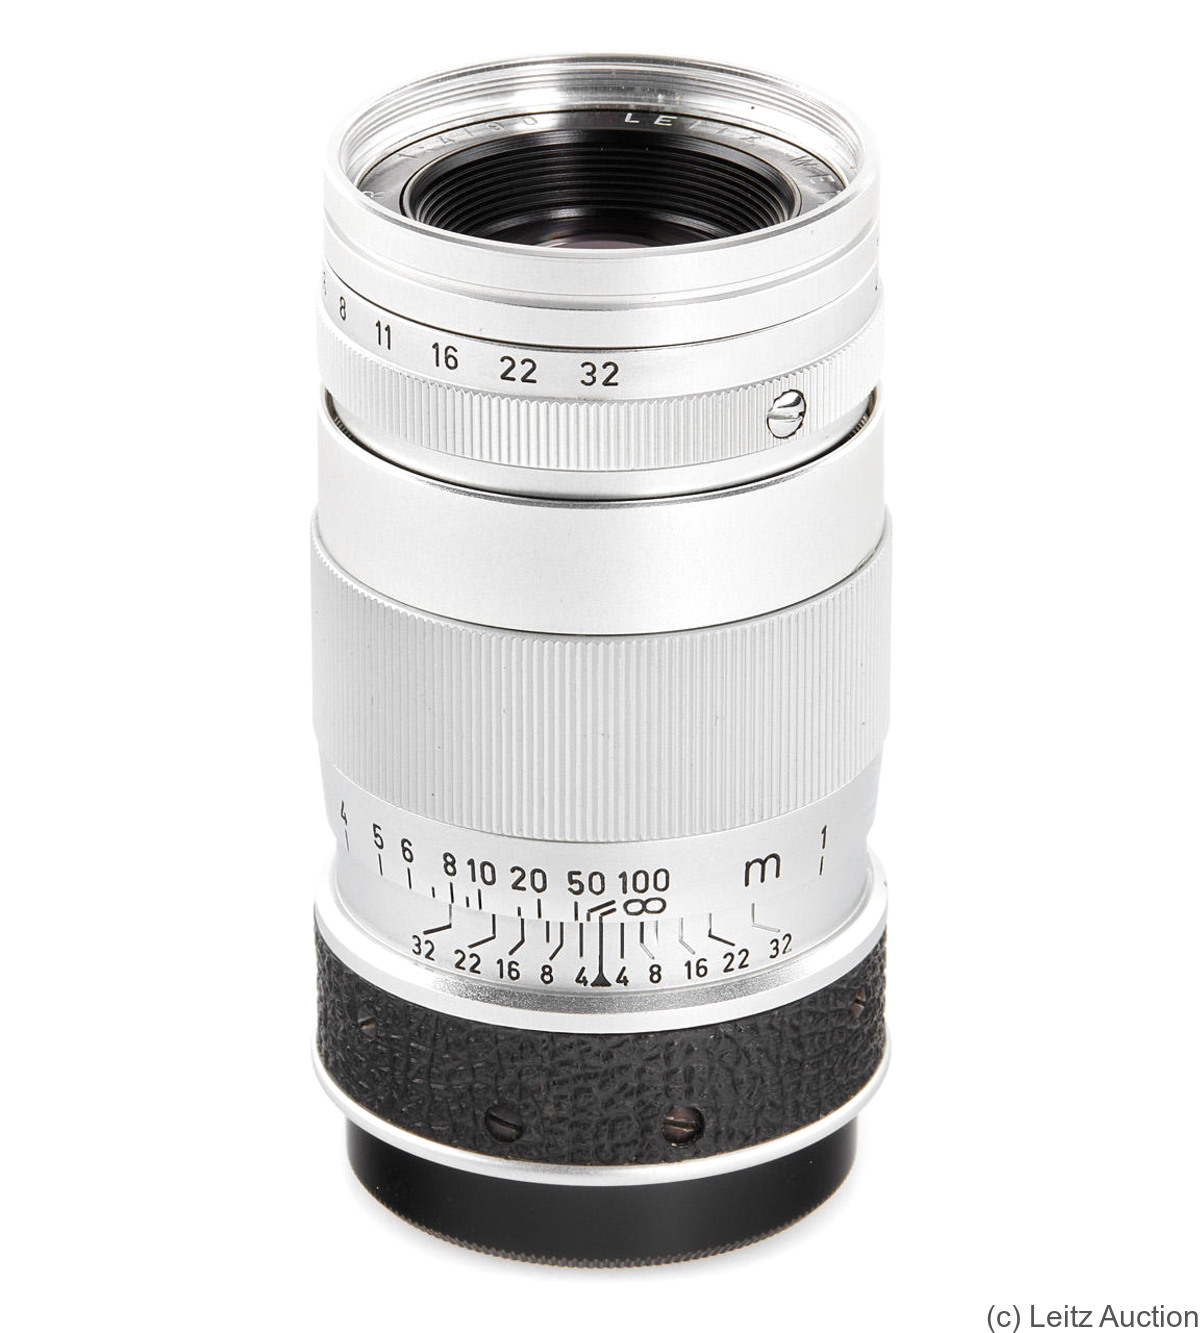 Leitz: 90mm (9cm) f4 Elmar (SM, 3 elt, prototype) camera